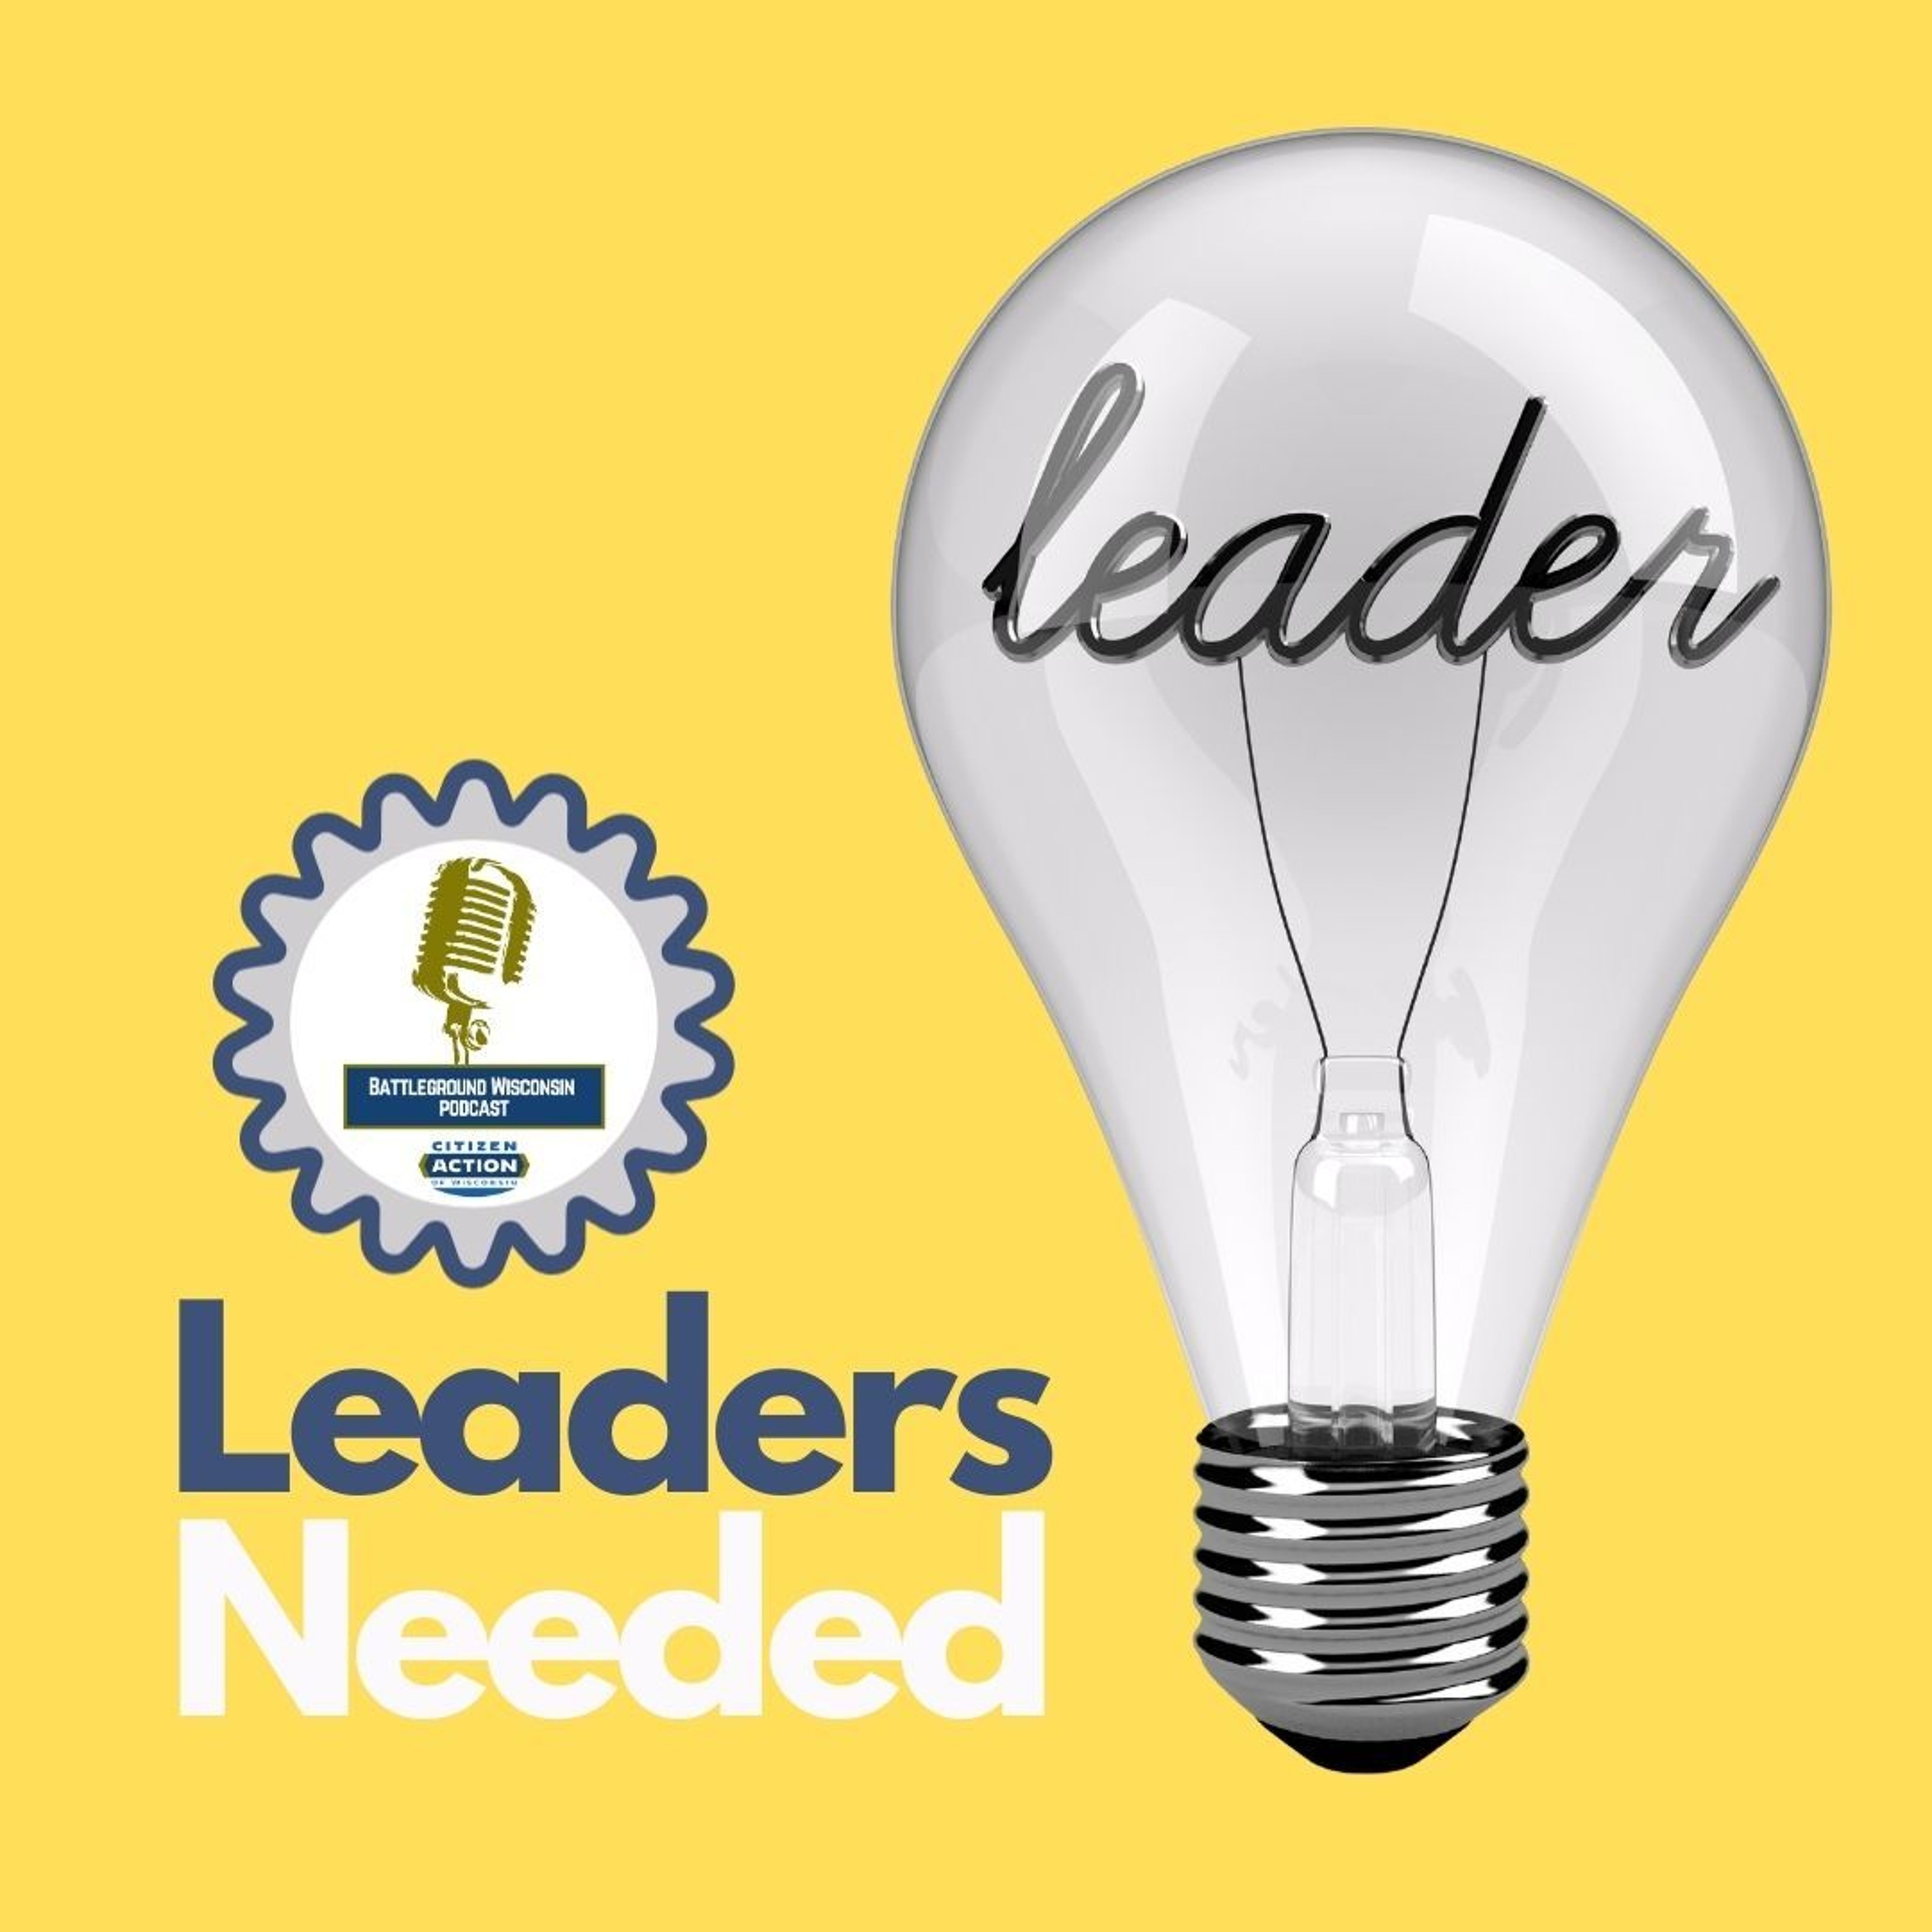 Leaders needed